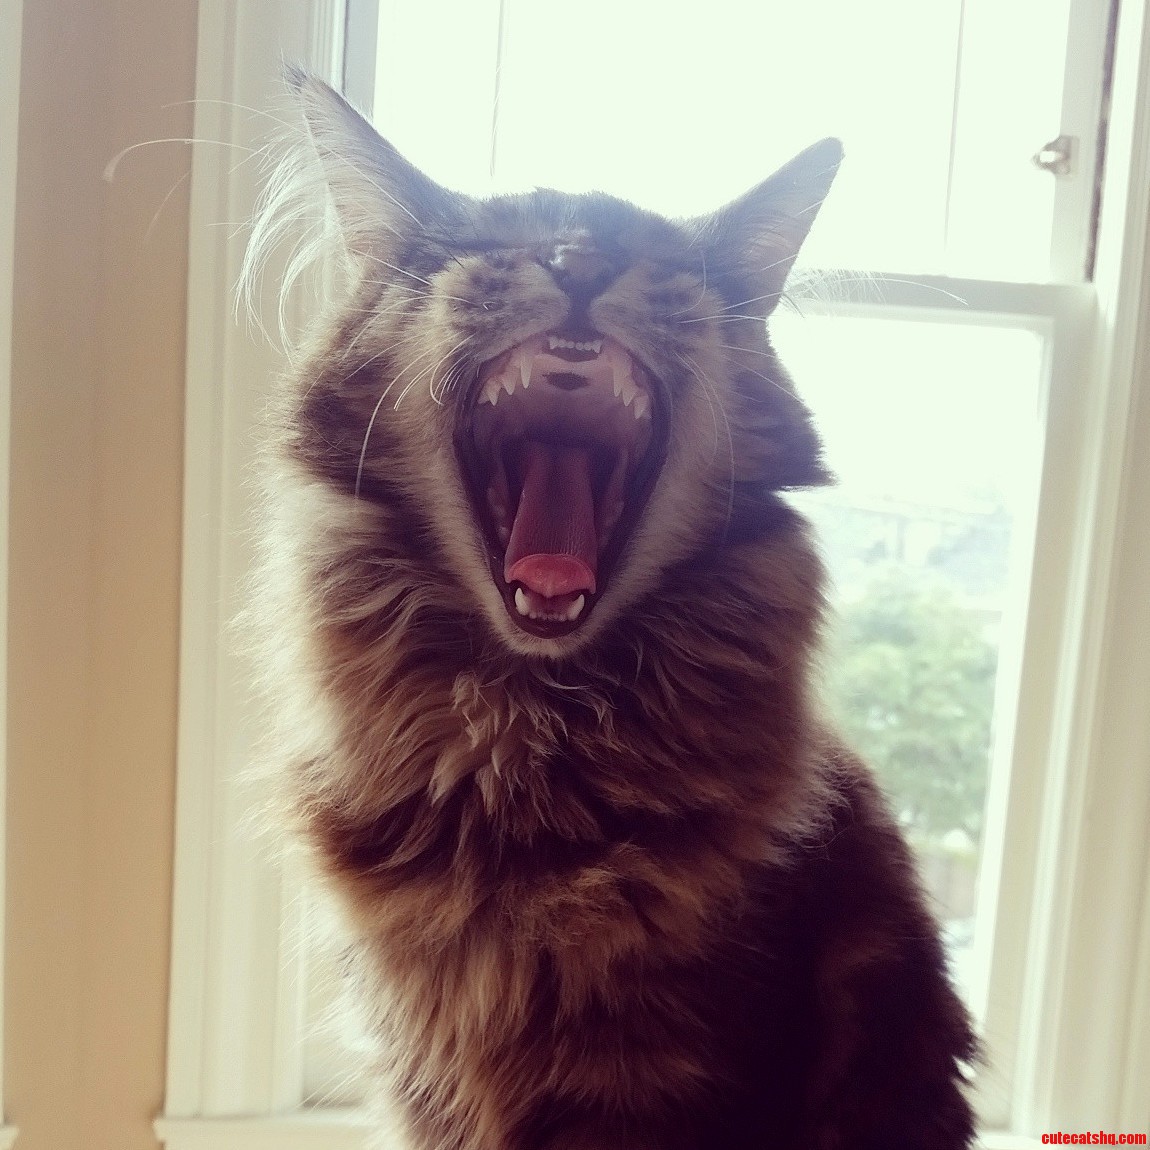 Freyas Ferocious Yawn